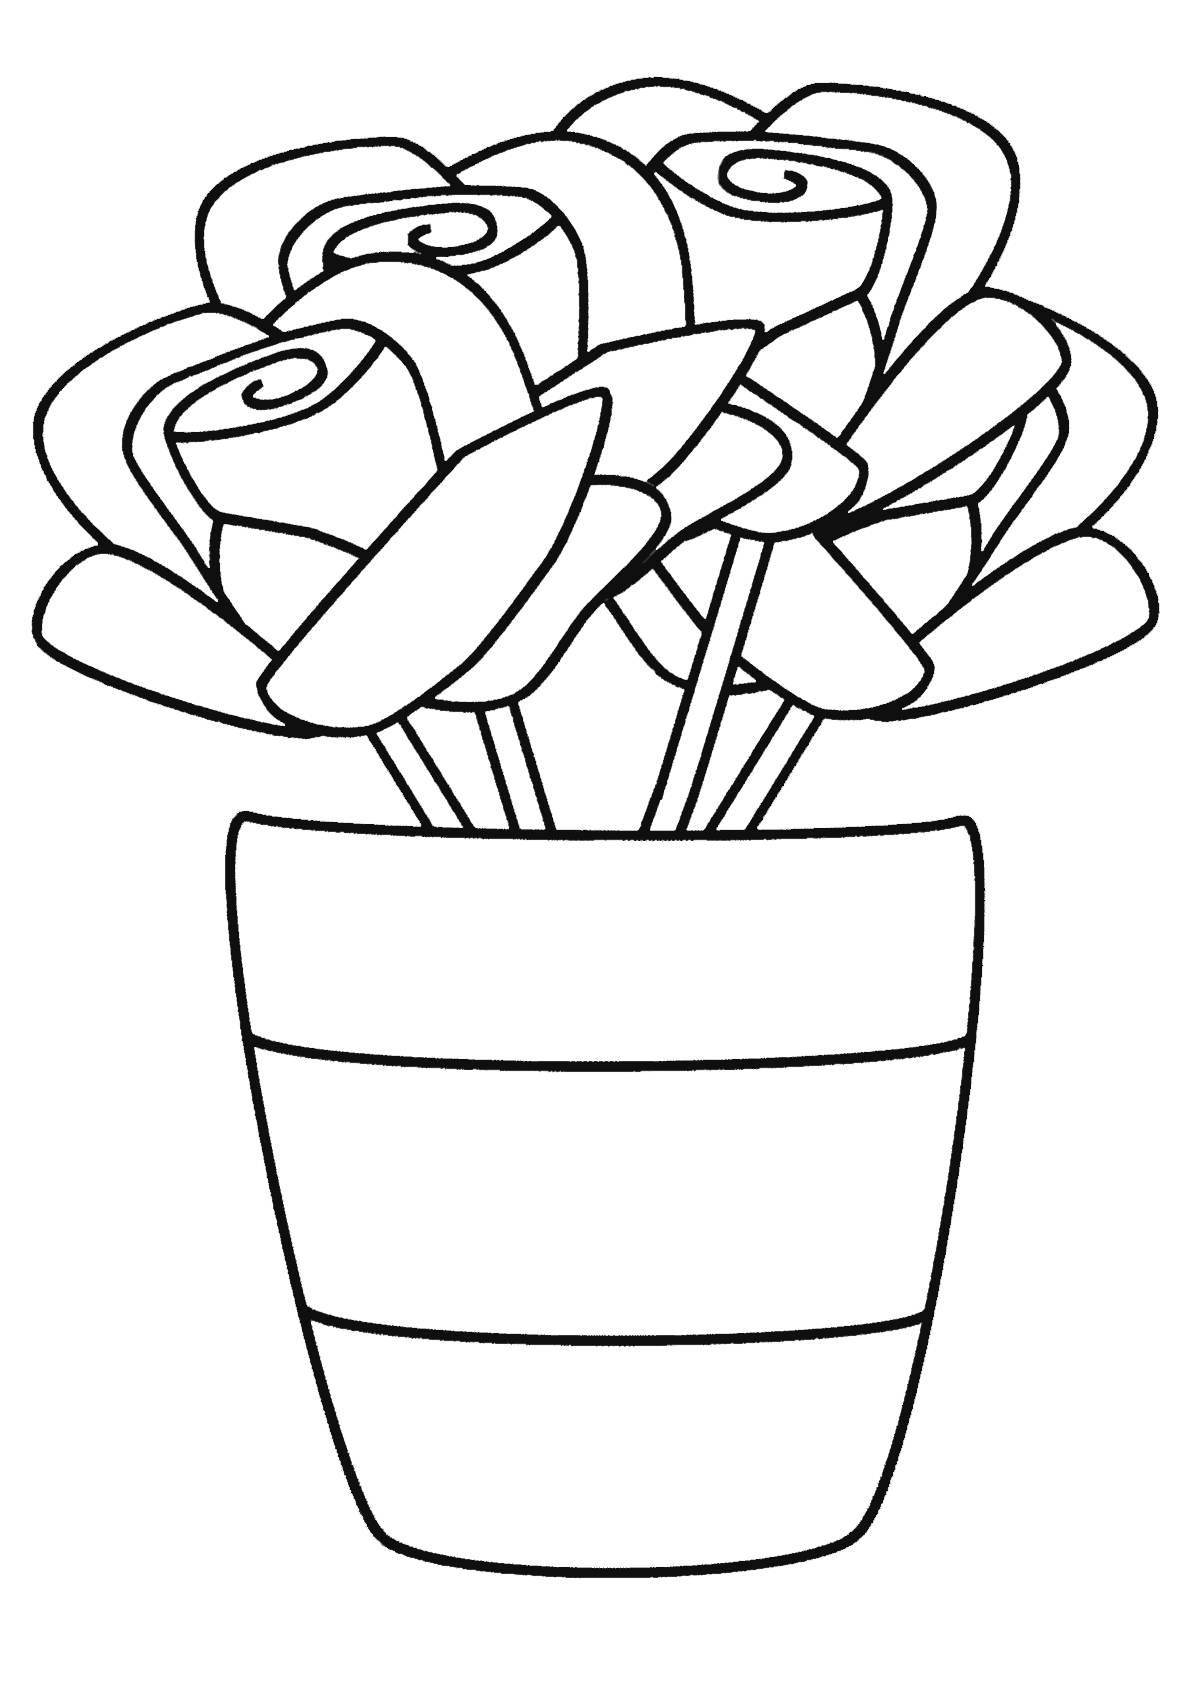 Adorable flower pot coloring page